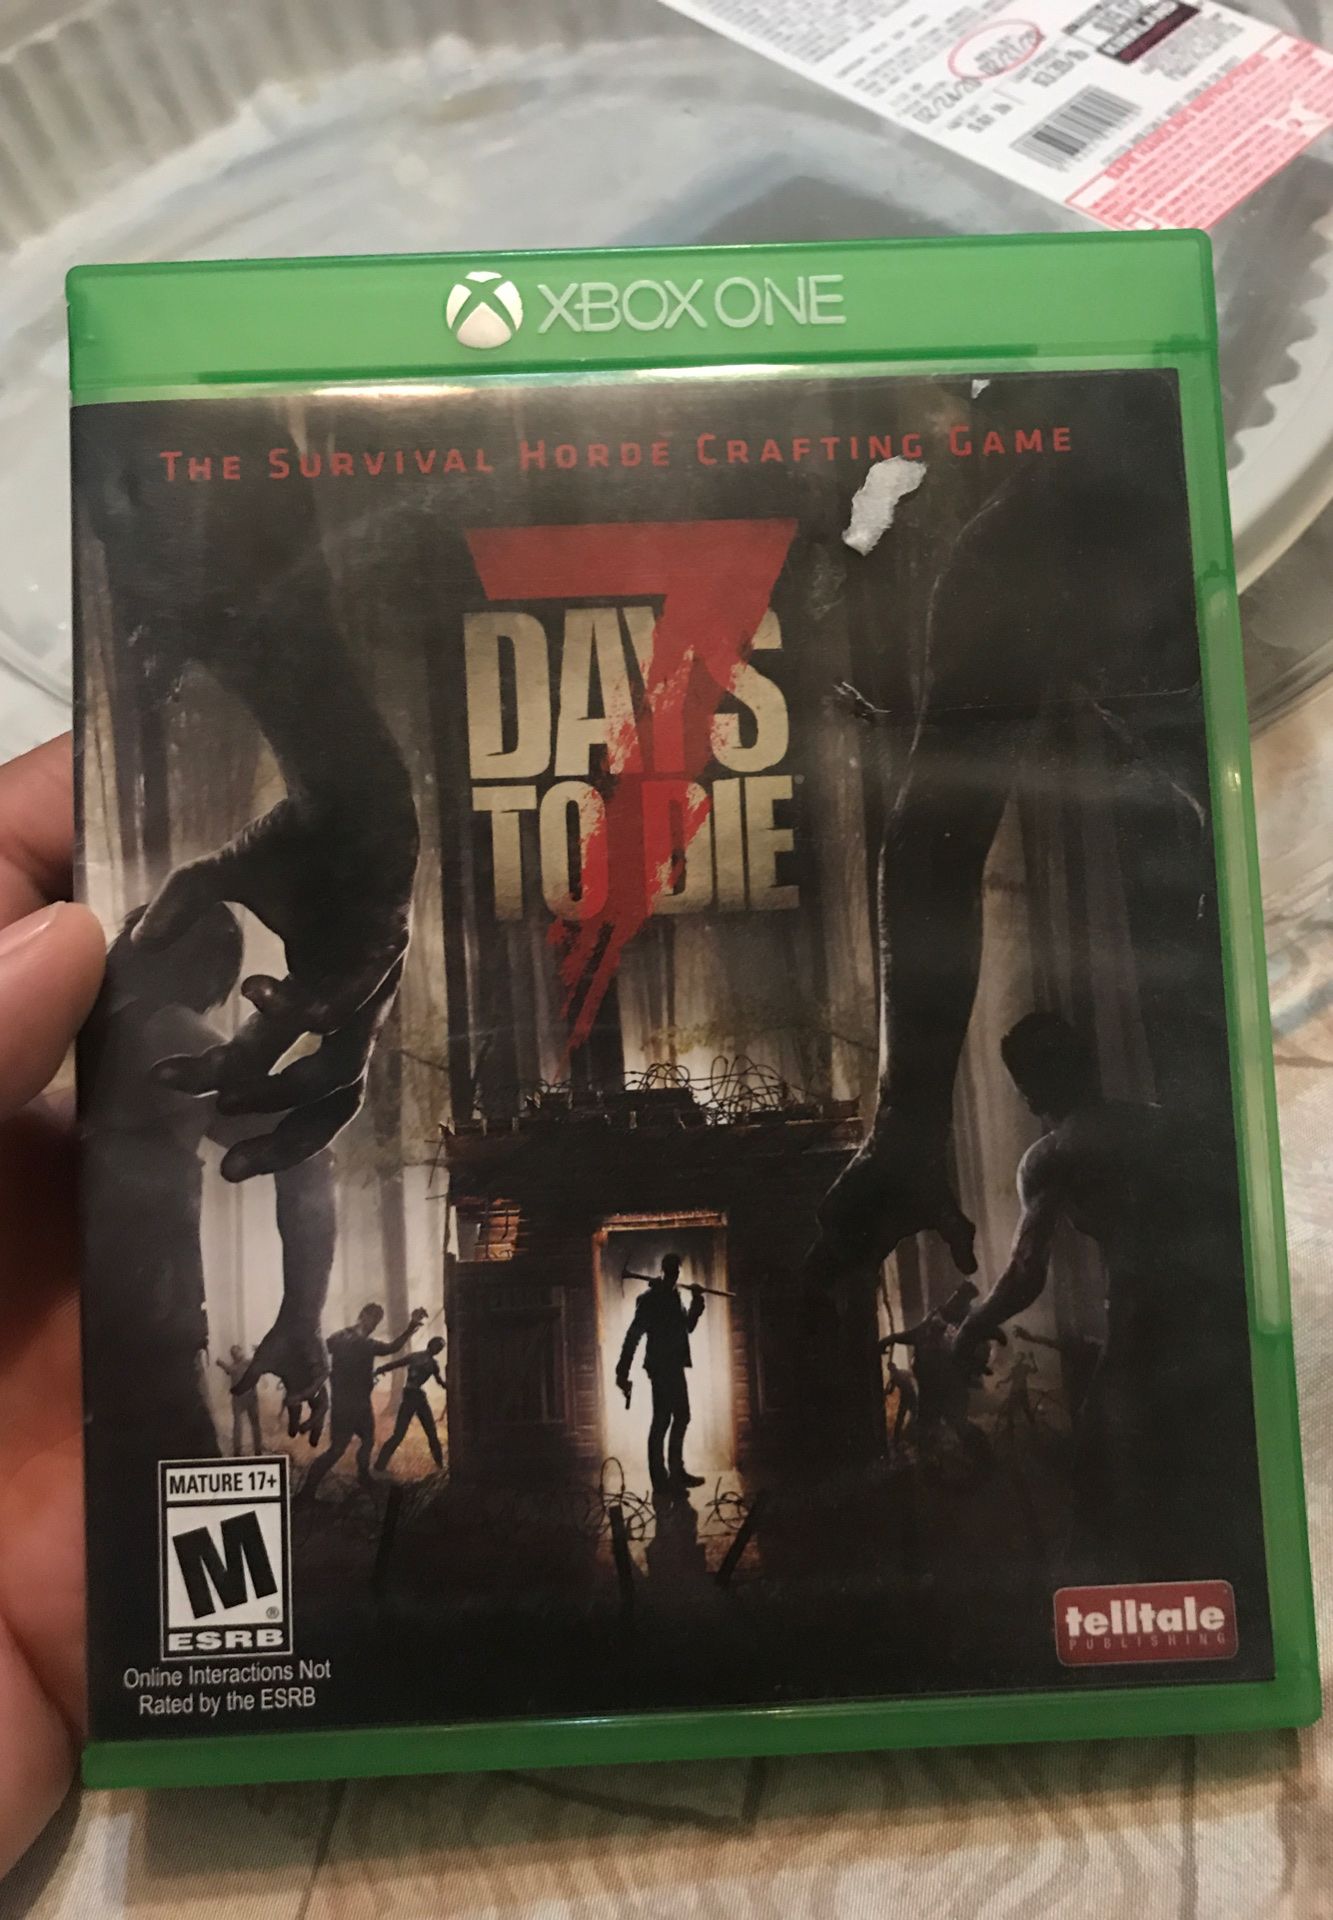 7 days to die Xbox one